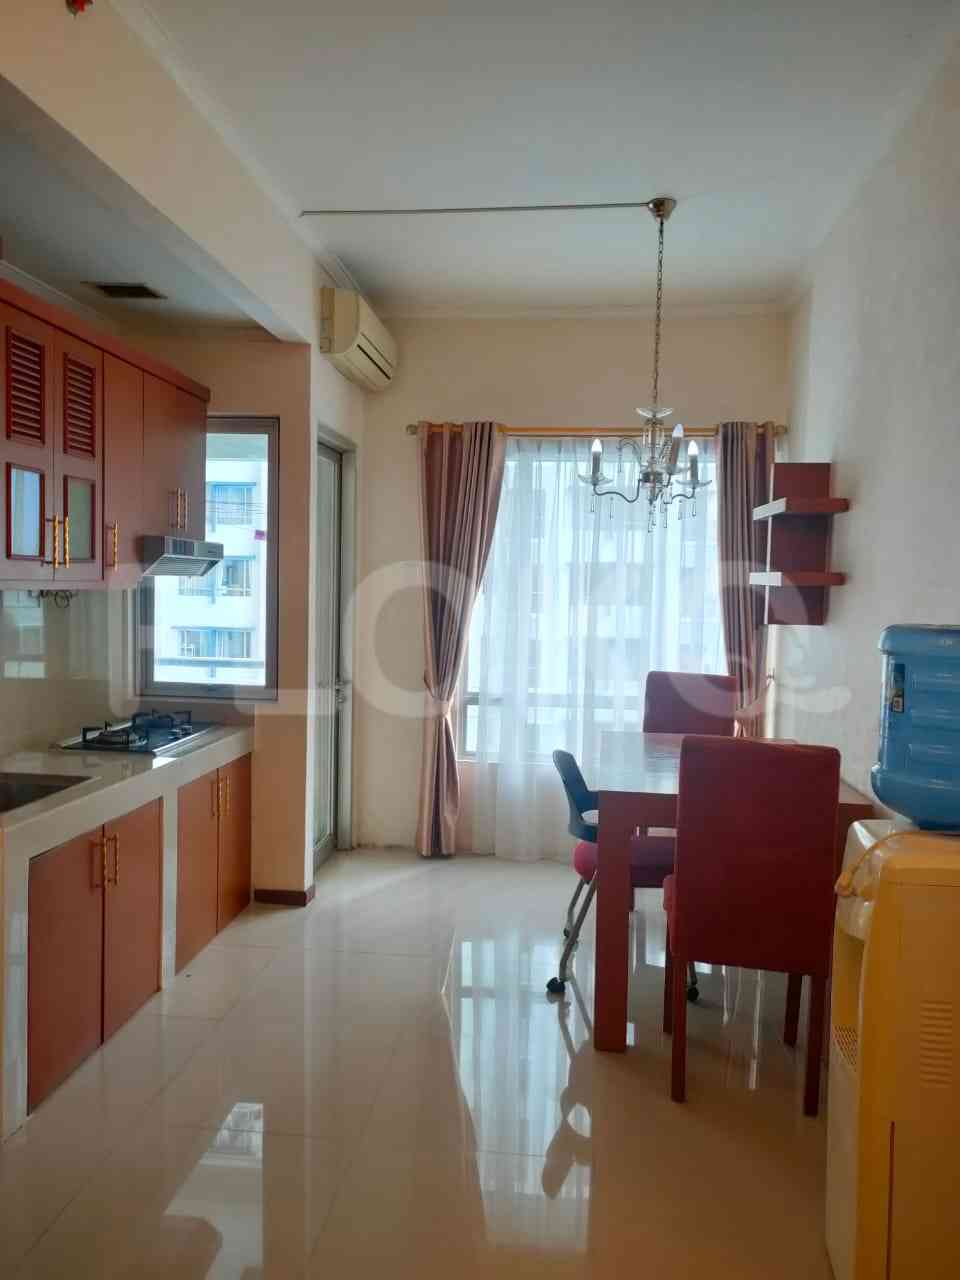 2 Bedroom on 6th Floor for Rent in Taman Anggrek Residence - fta3bd 6